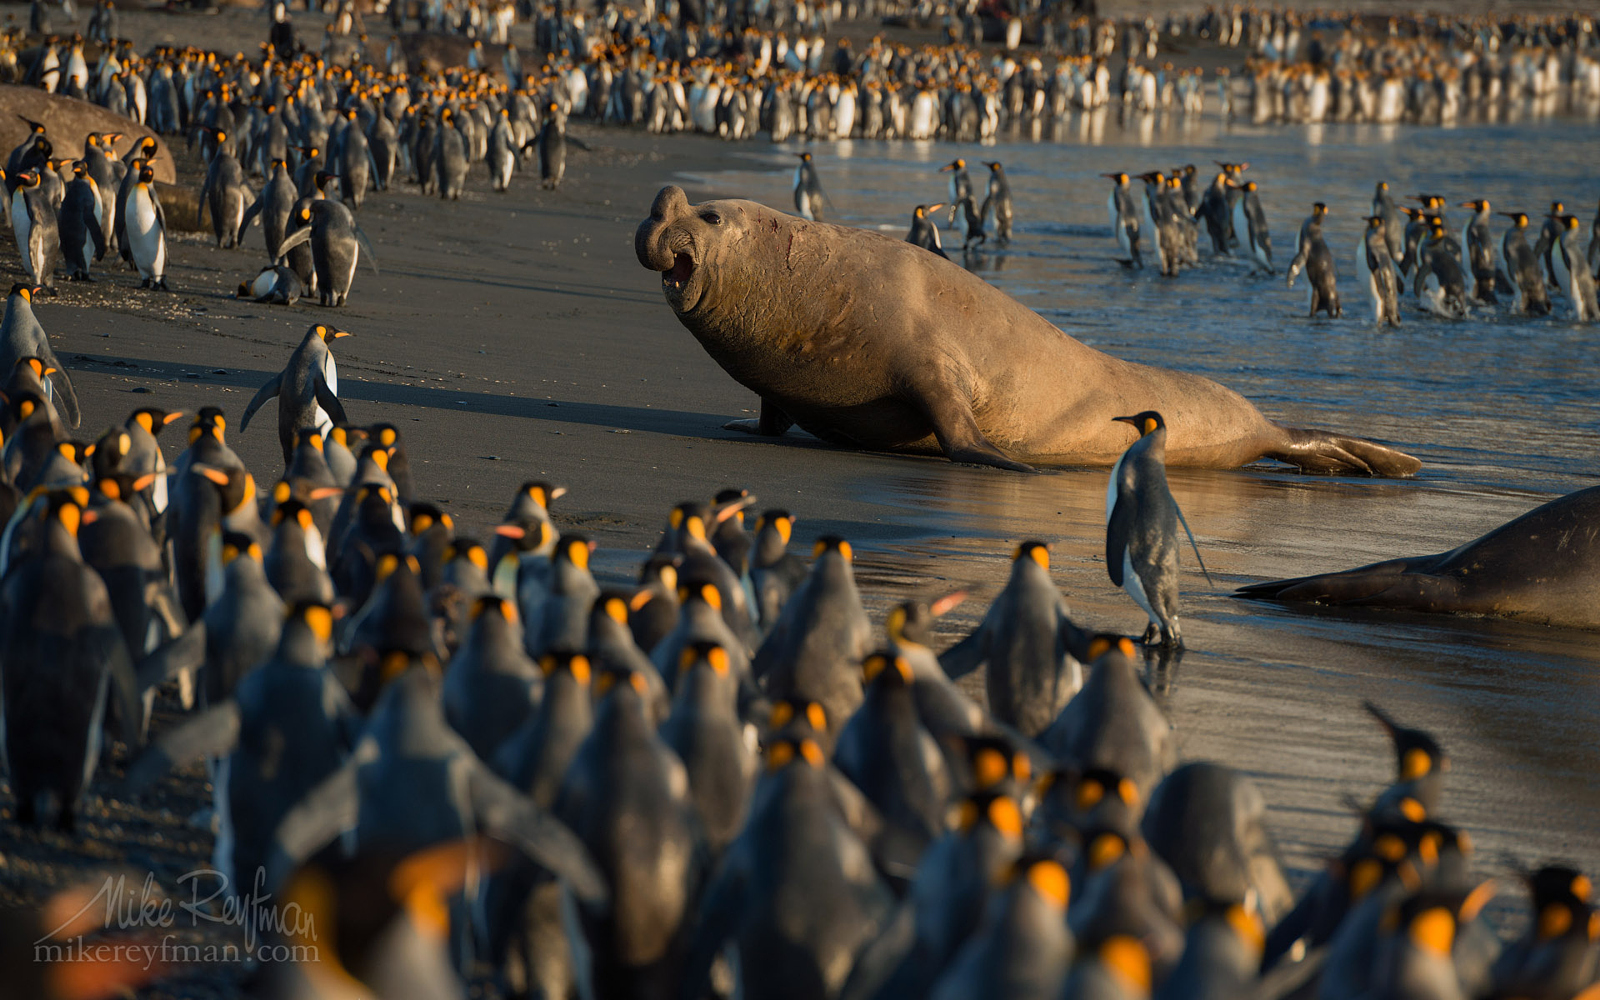 Top 20 Wildlife Photos on 500px So Far This Year